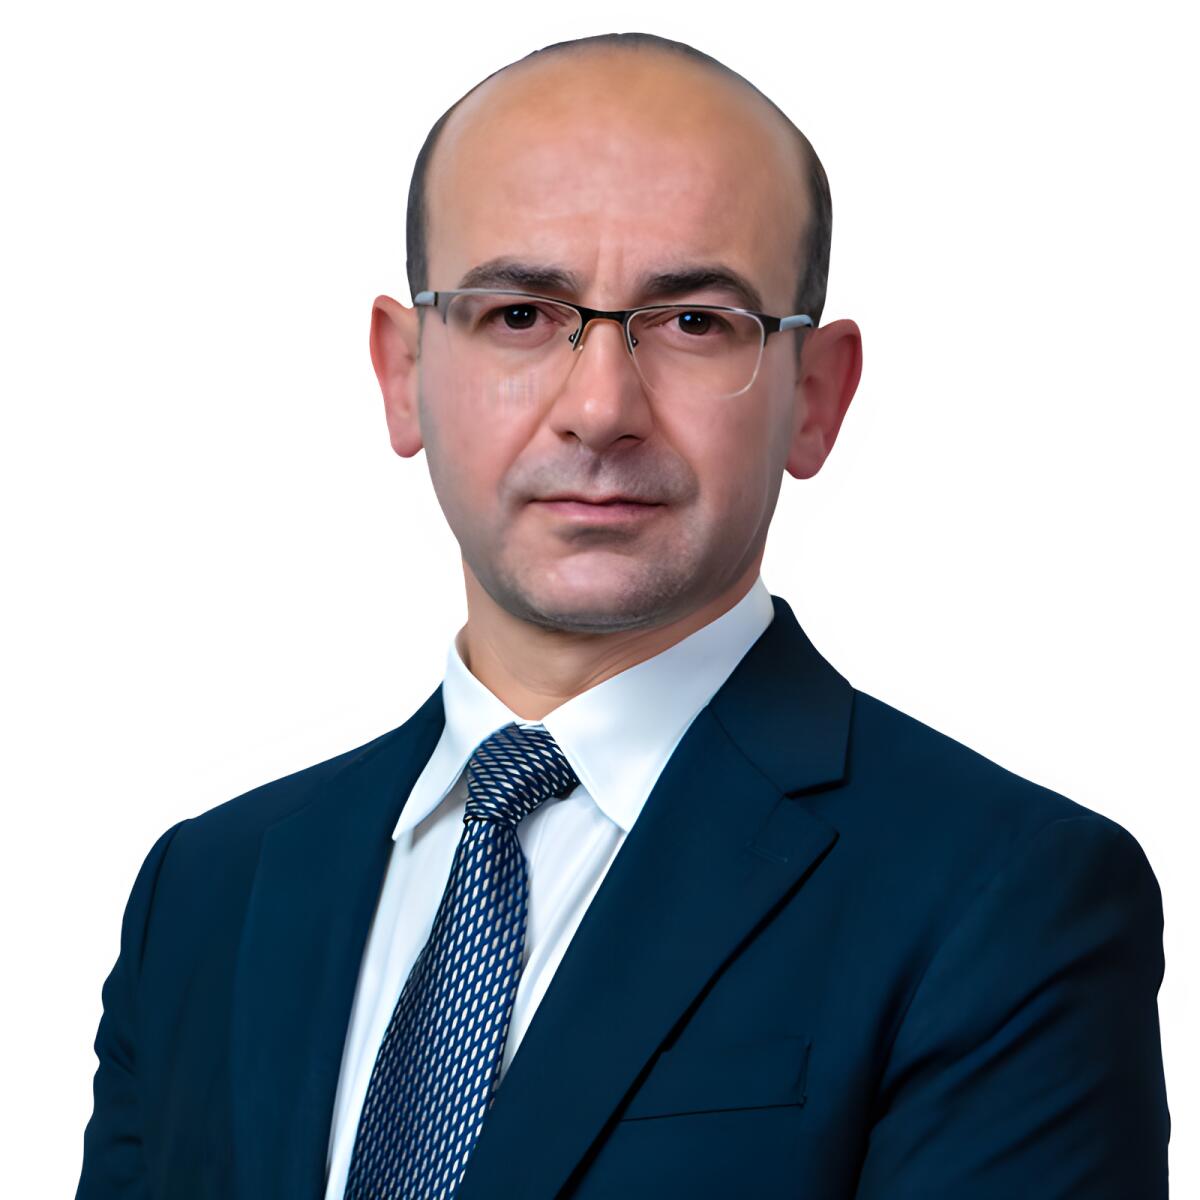 Dr Badeh Nabil Zraik